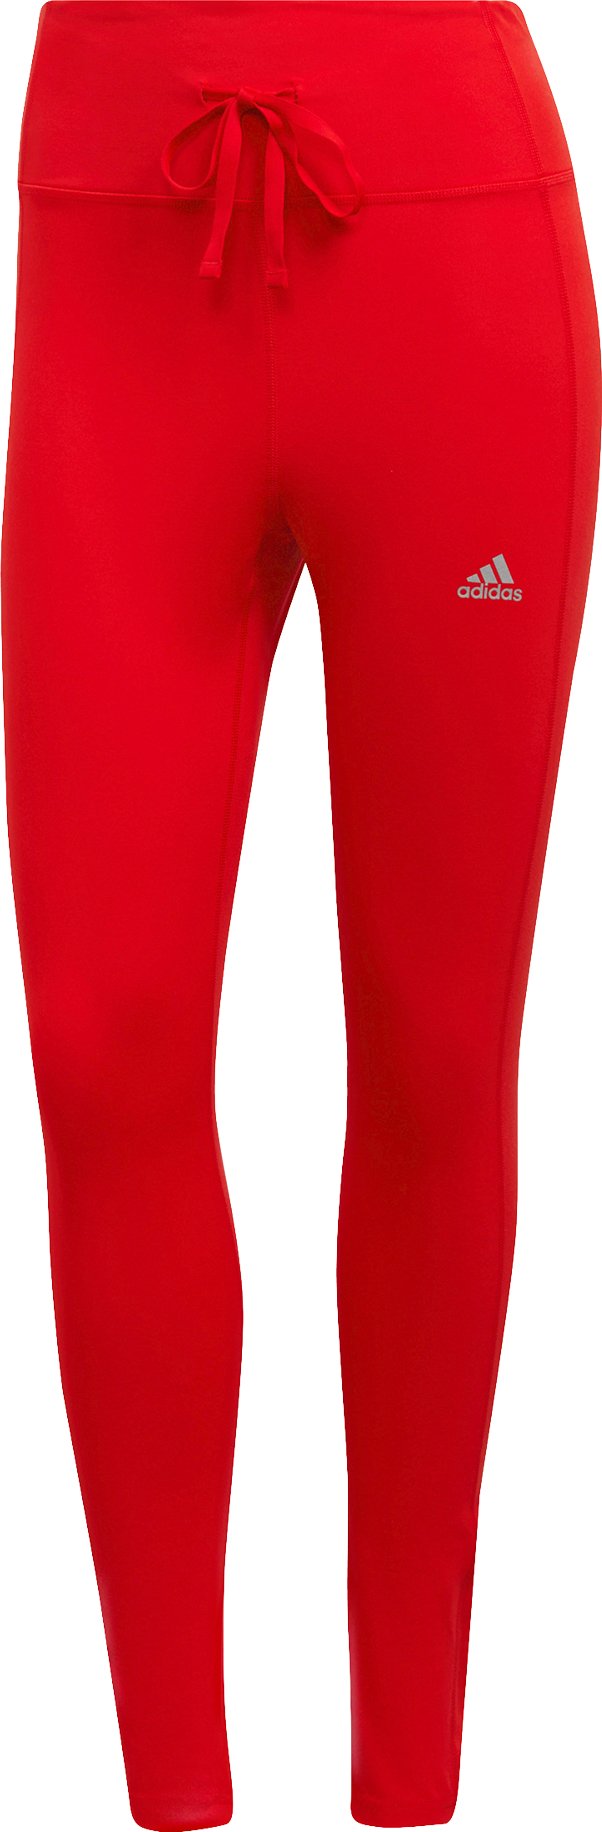 adidas Women's Leggings & Tights - Red